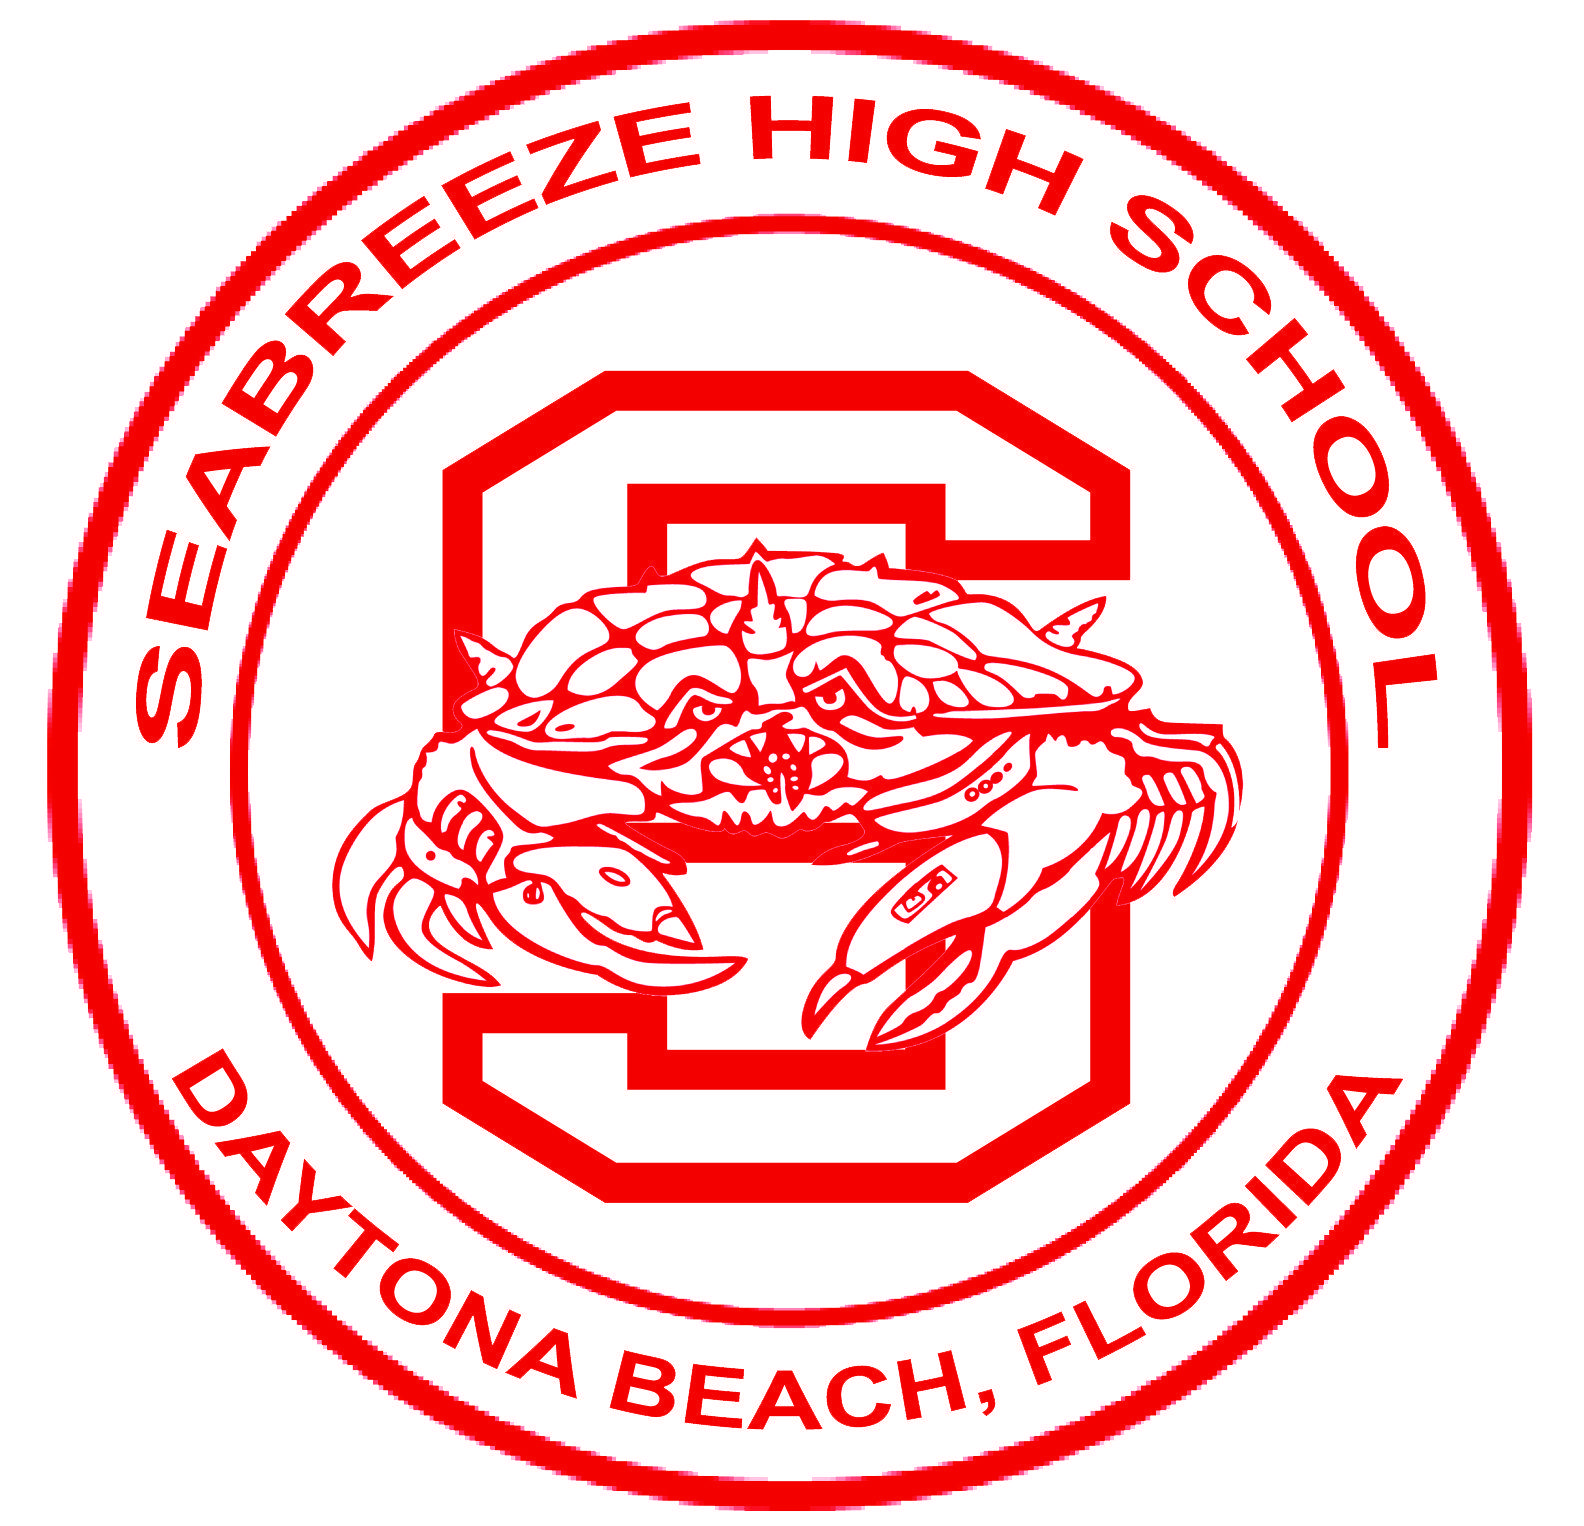 Beach Circle Logo - Sandcrab logos - Seabreeze High School